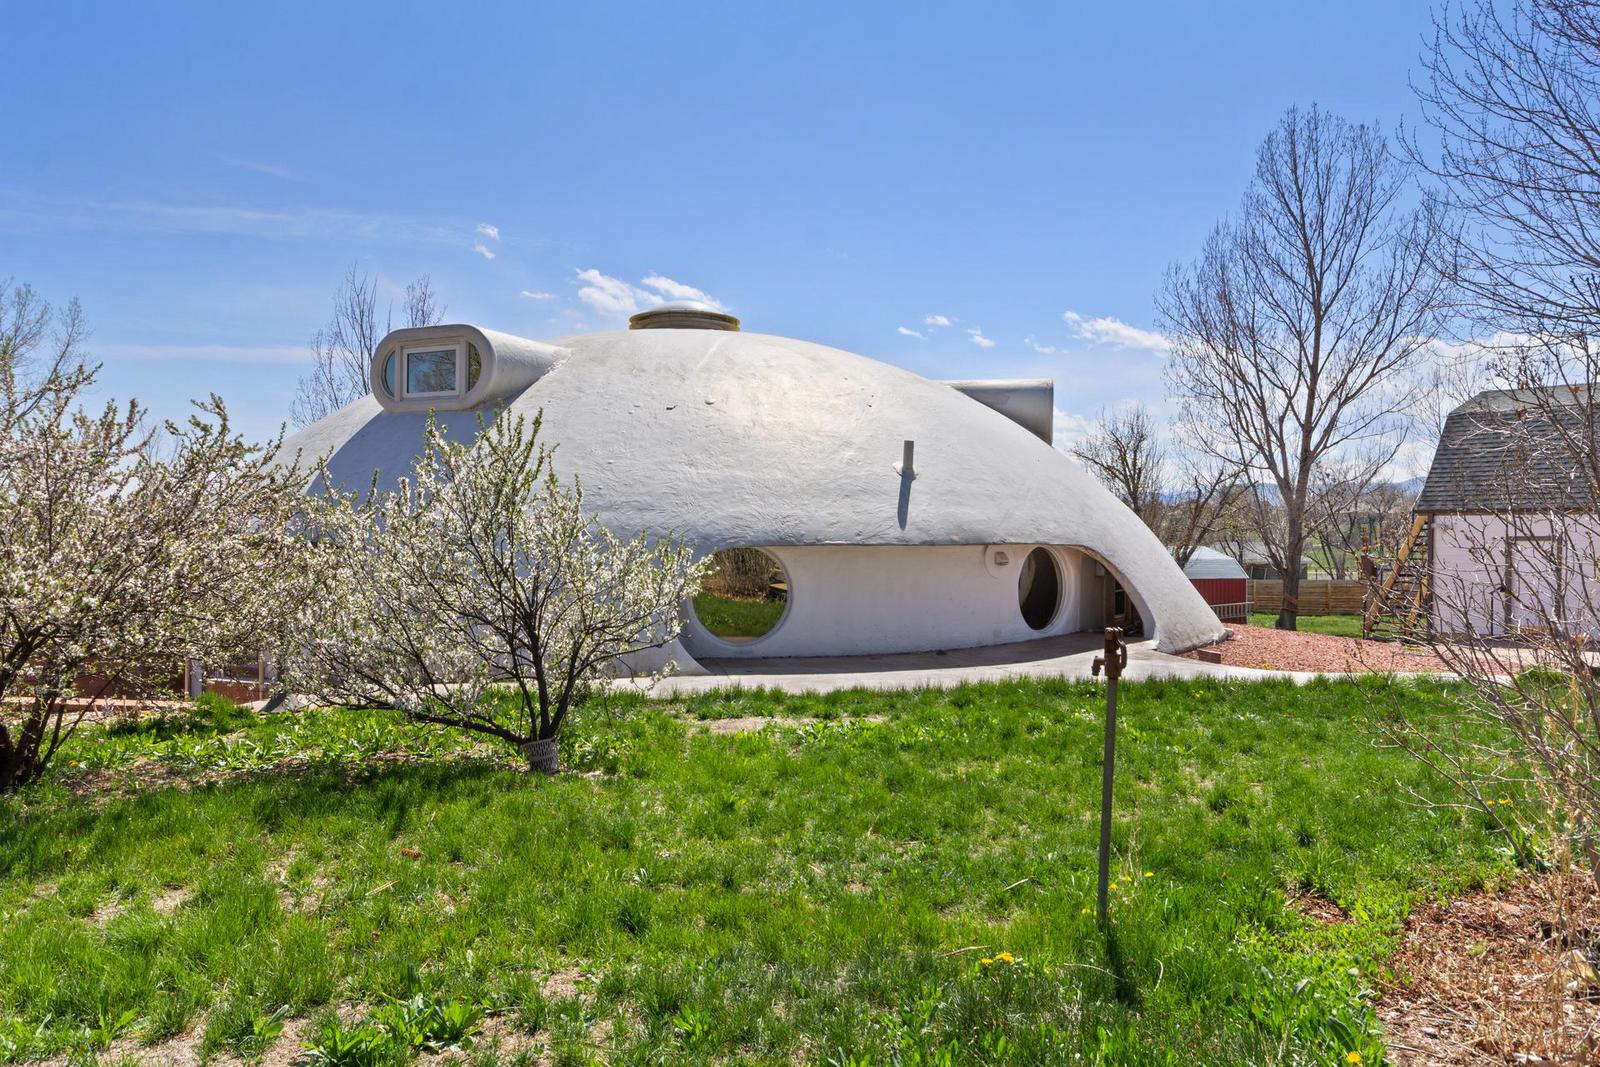 Spaceship dome home